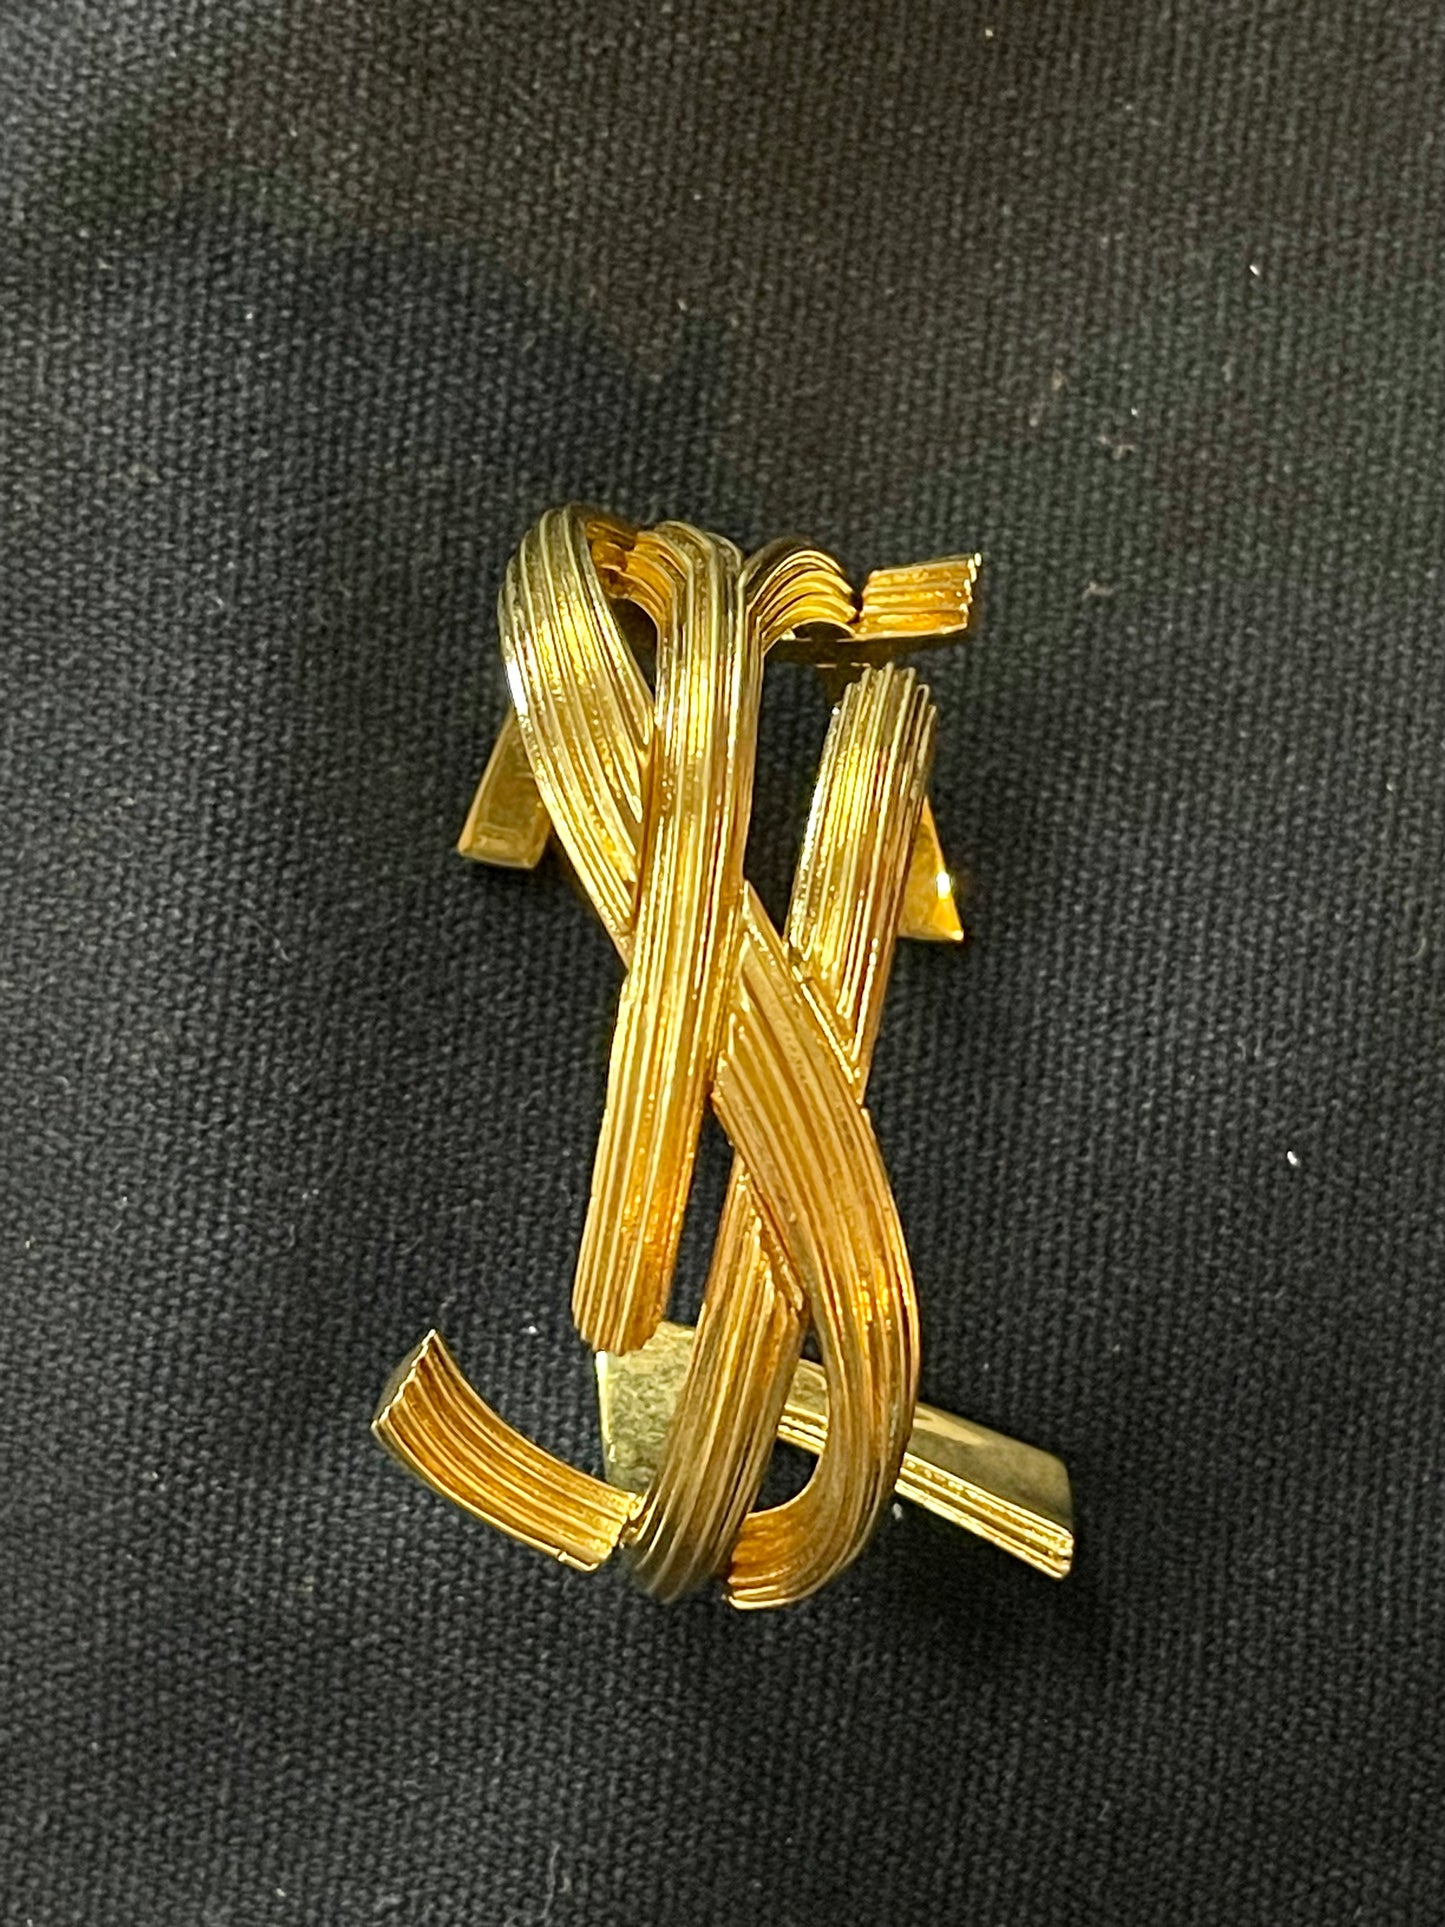 Vintage Gold Color YSL Cuff